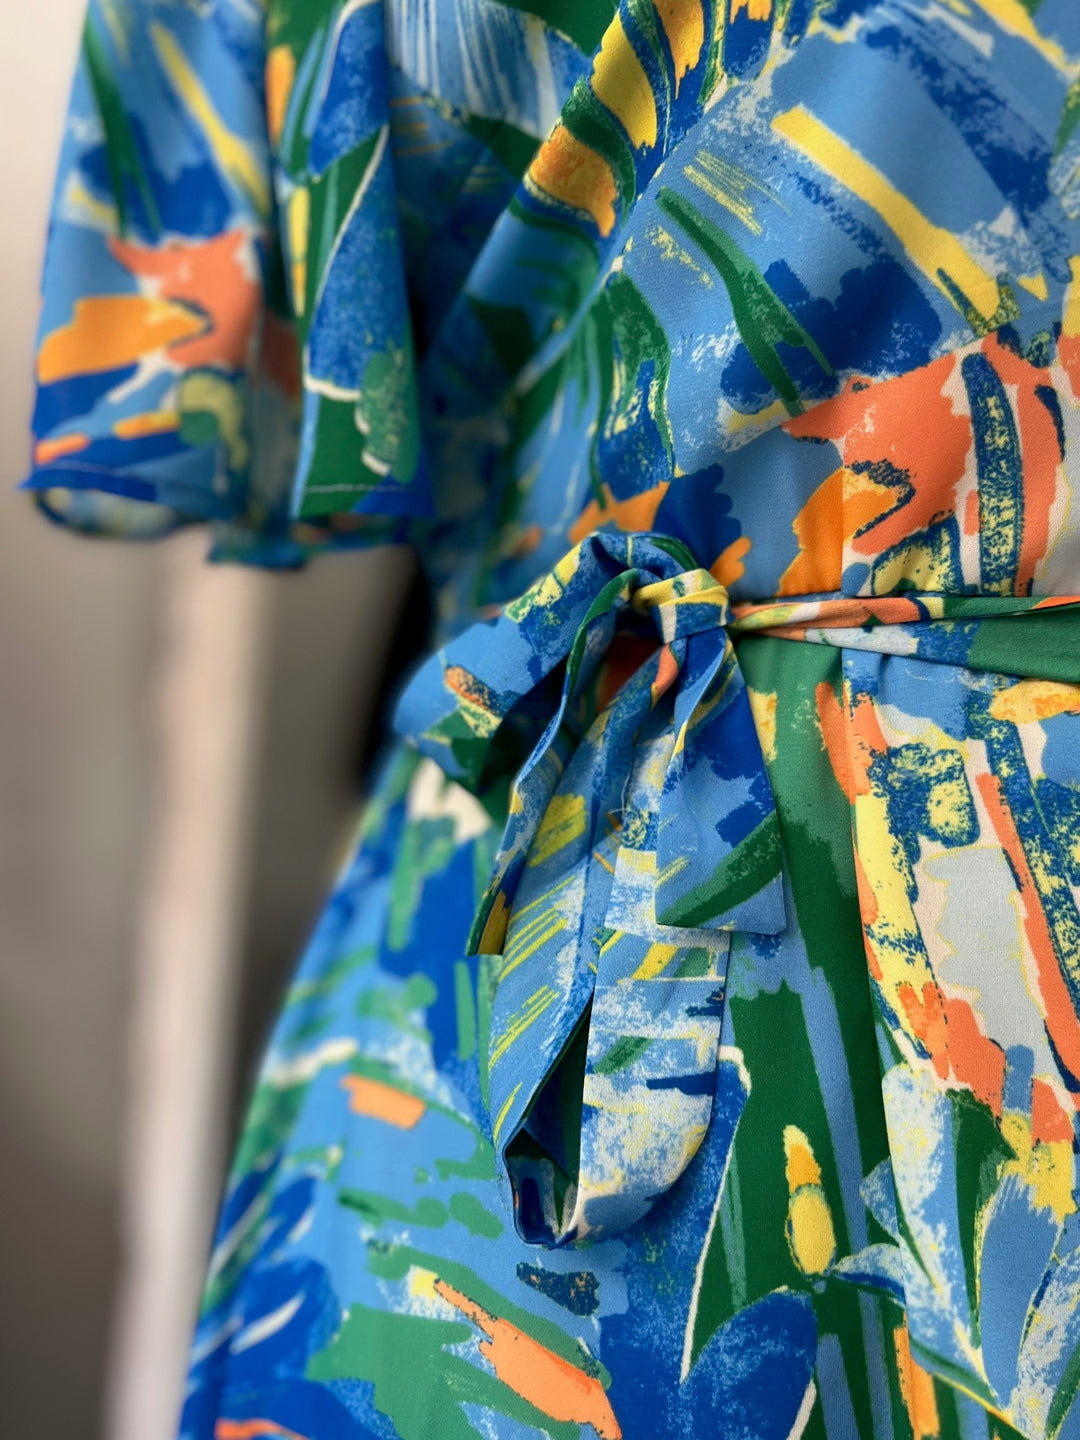 Flying Tomato Plus Size Short Sleeve Blue & Green Tropical Wrap Maxi Dress